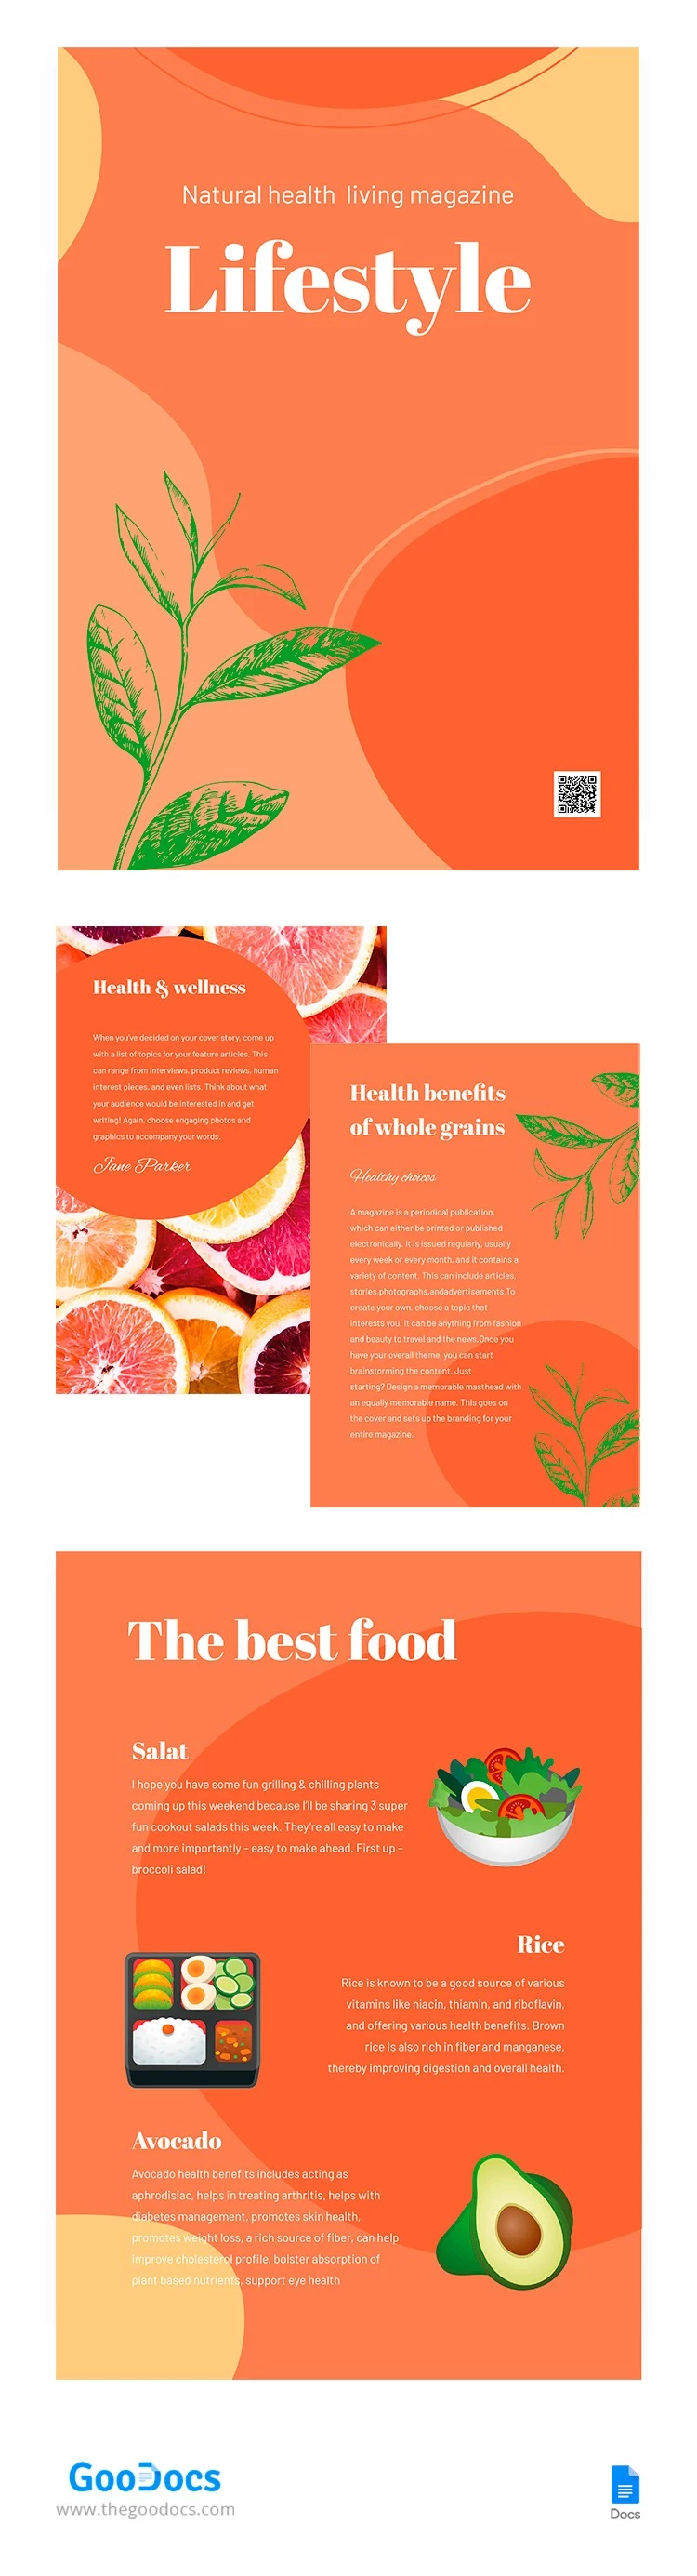 Health Lifestyle Magazine - free Google Docs Template - 10063199